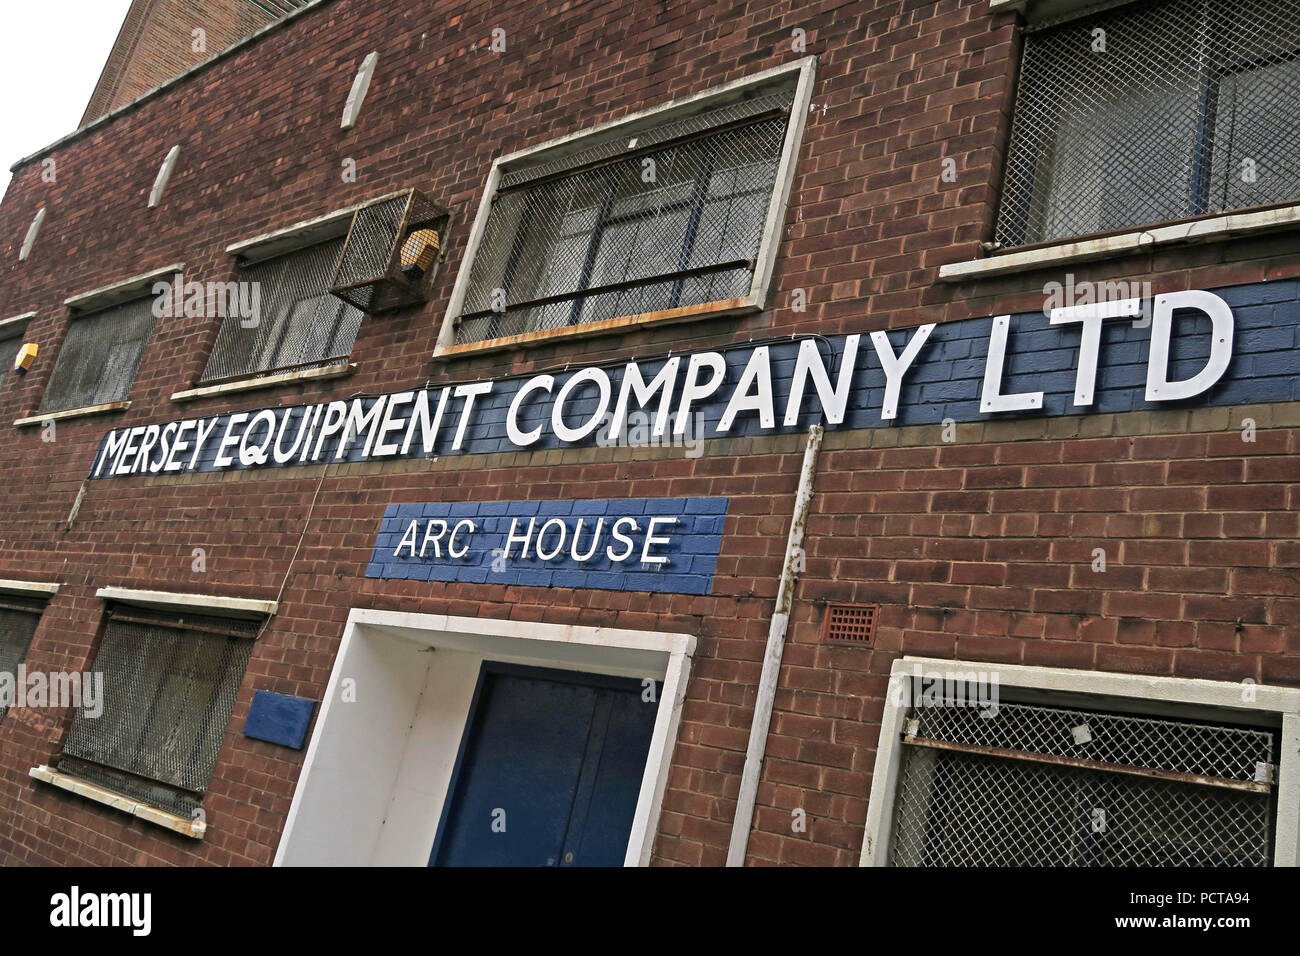 Arc House, Mersey Equipment Company Ltd, Arc House, Birkenhead, Wirral, Merseyside North West England, Regno Unito Foto Stock